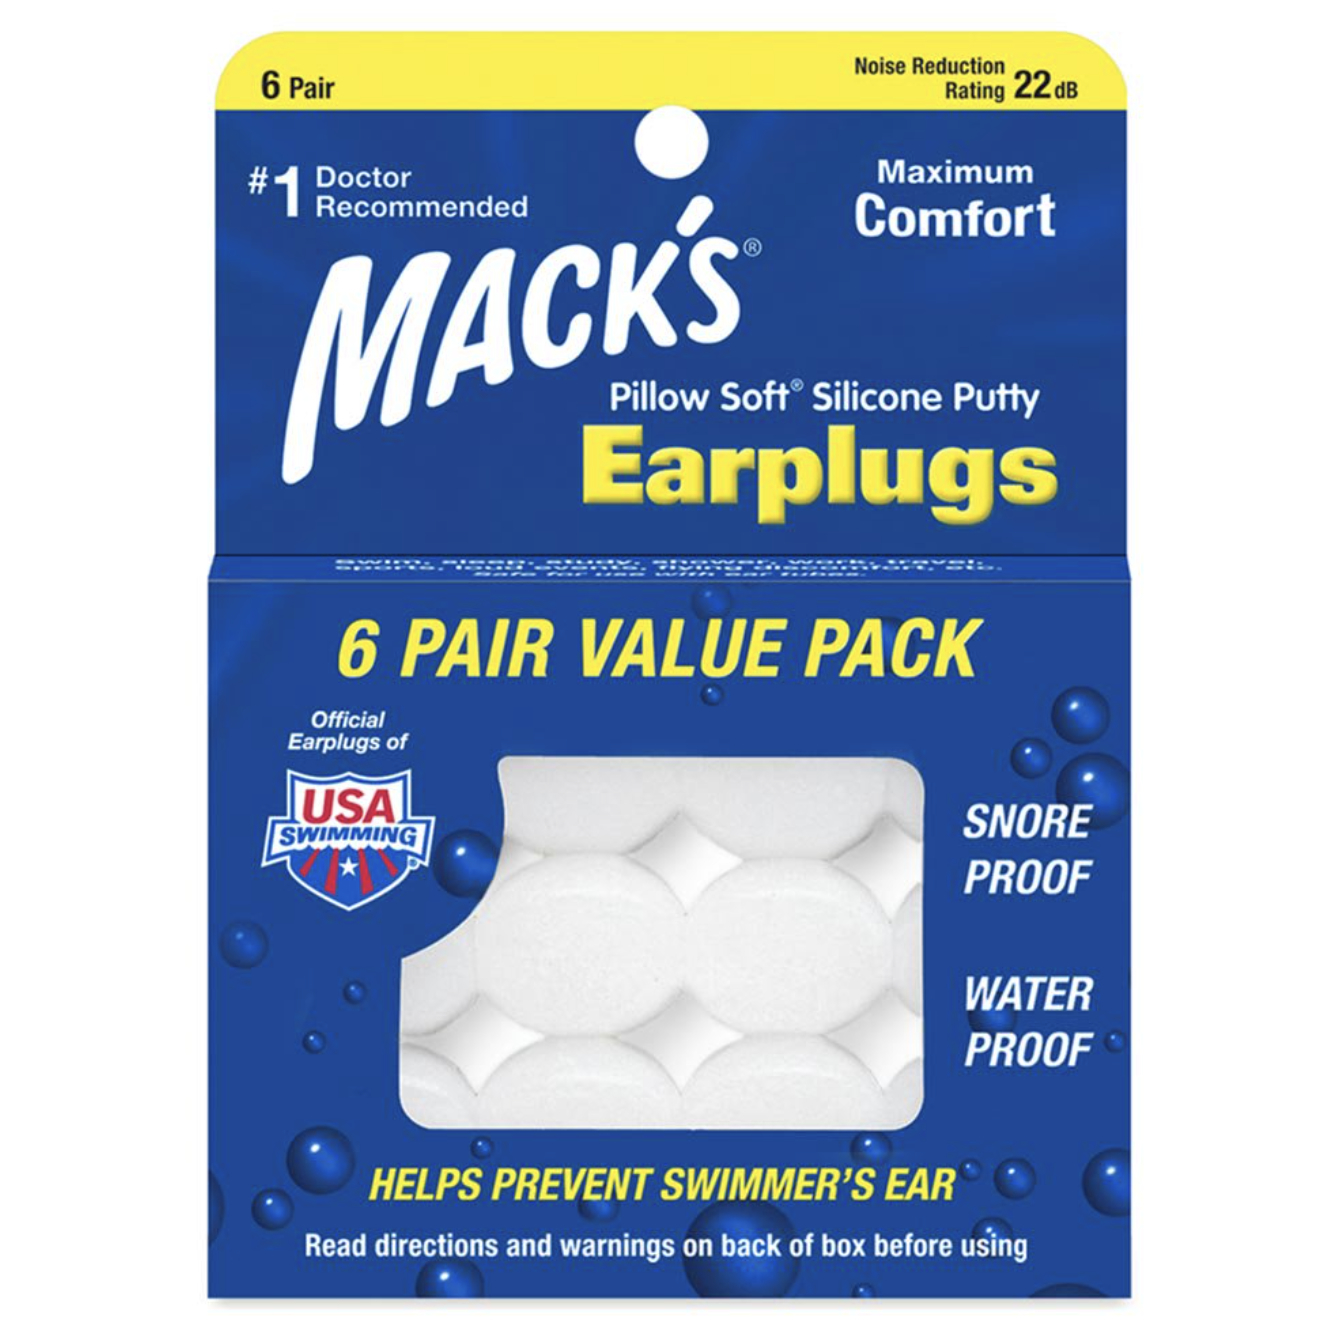 The ear plugs